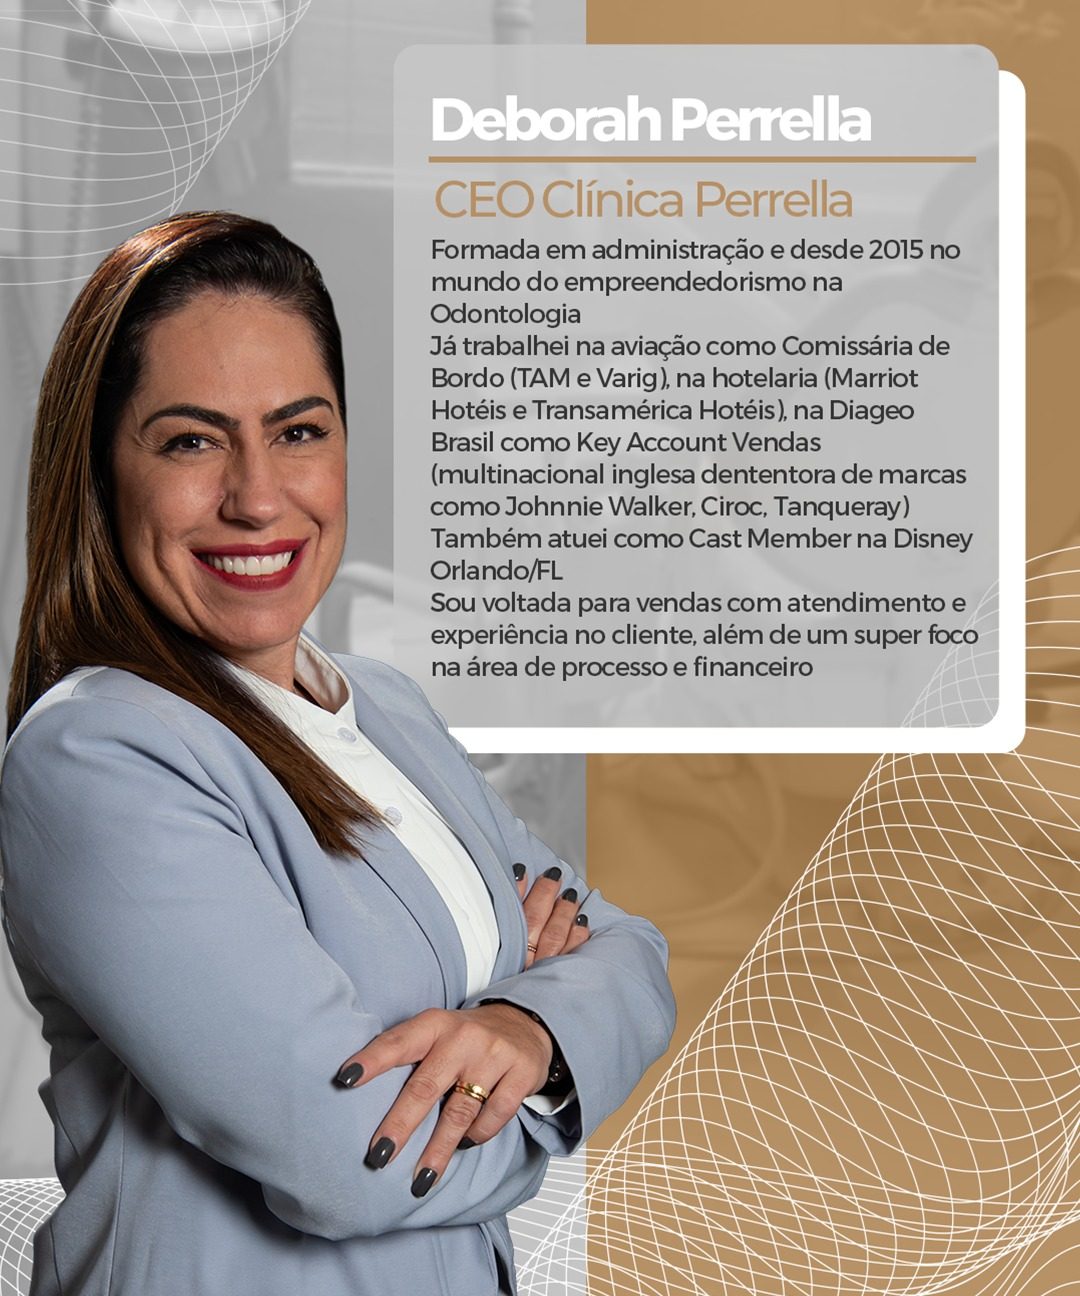 Deborah Perrella